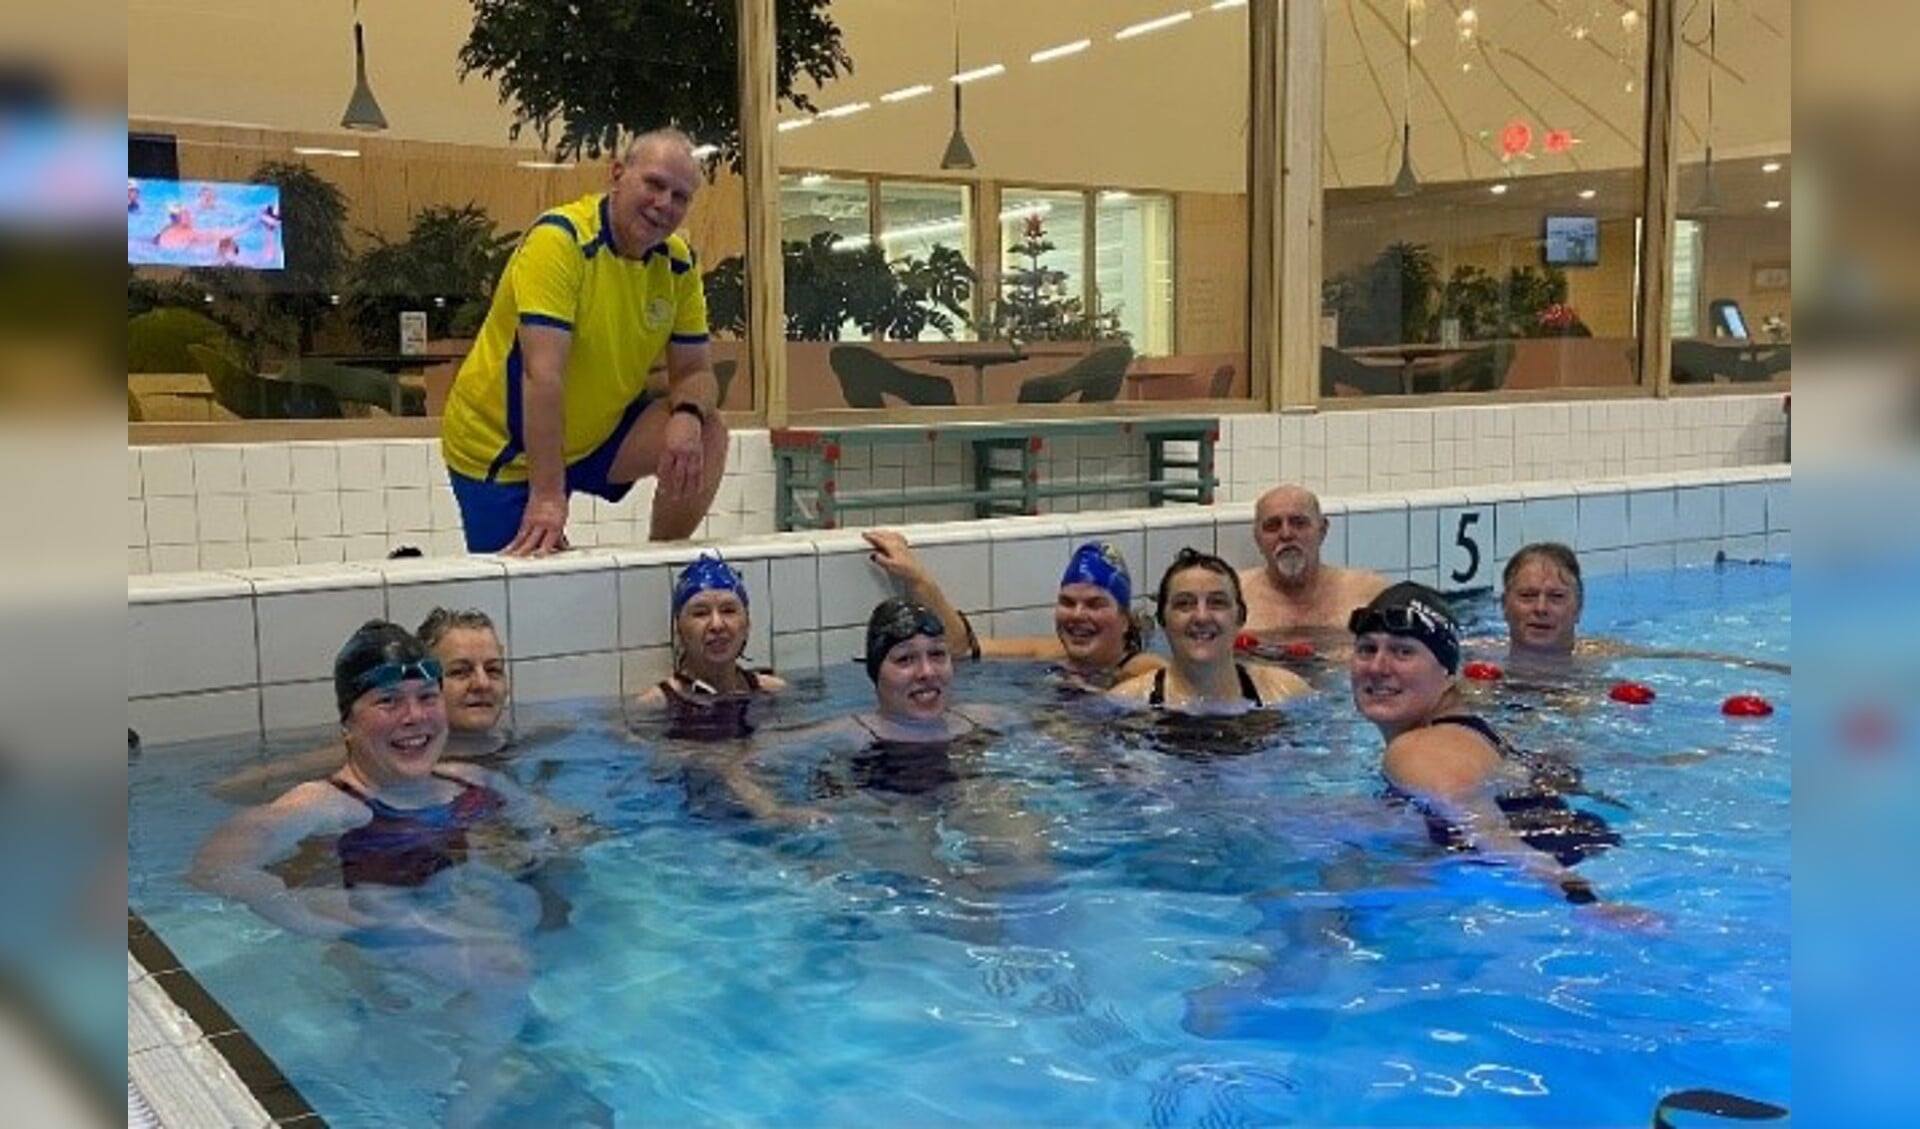 Trimzwemmers met begeleider Hans van Z&PC Nunspeet